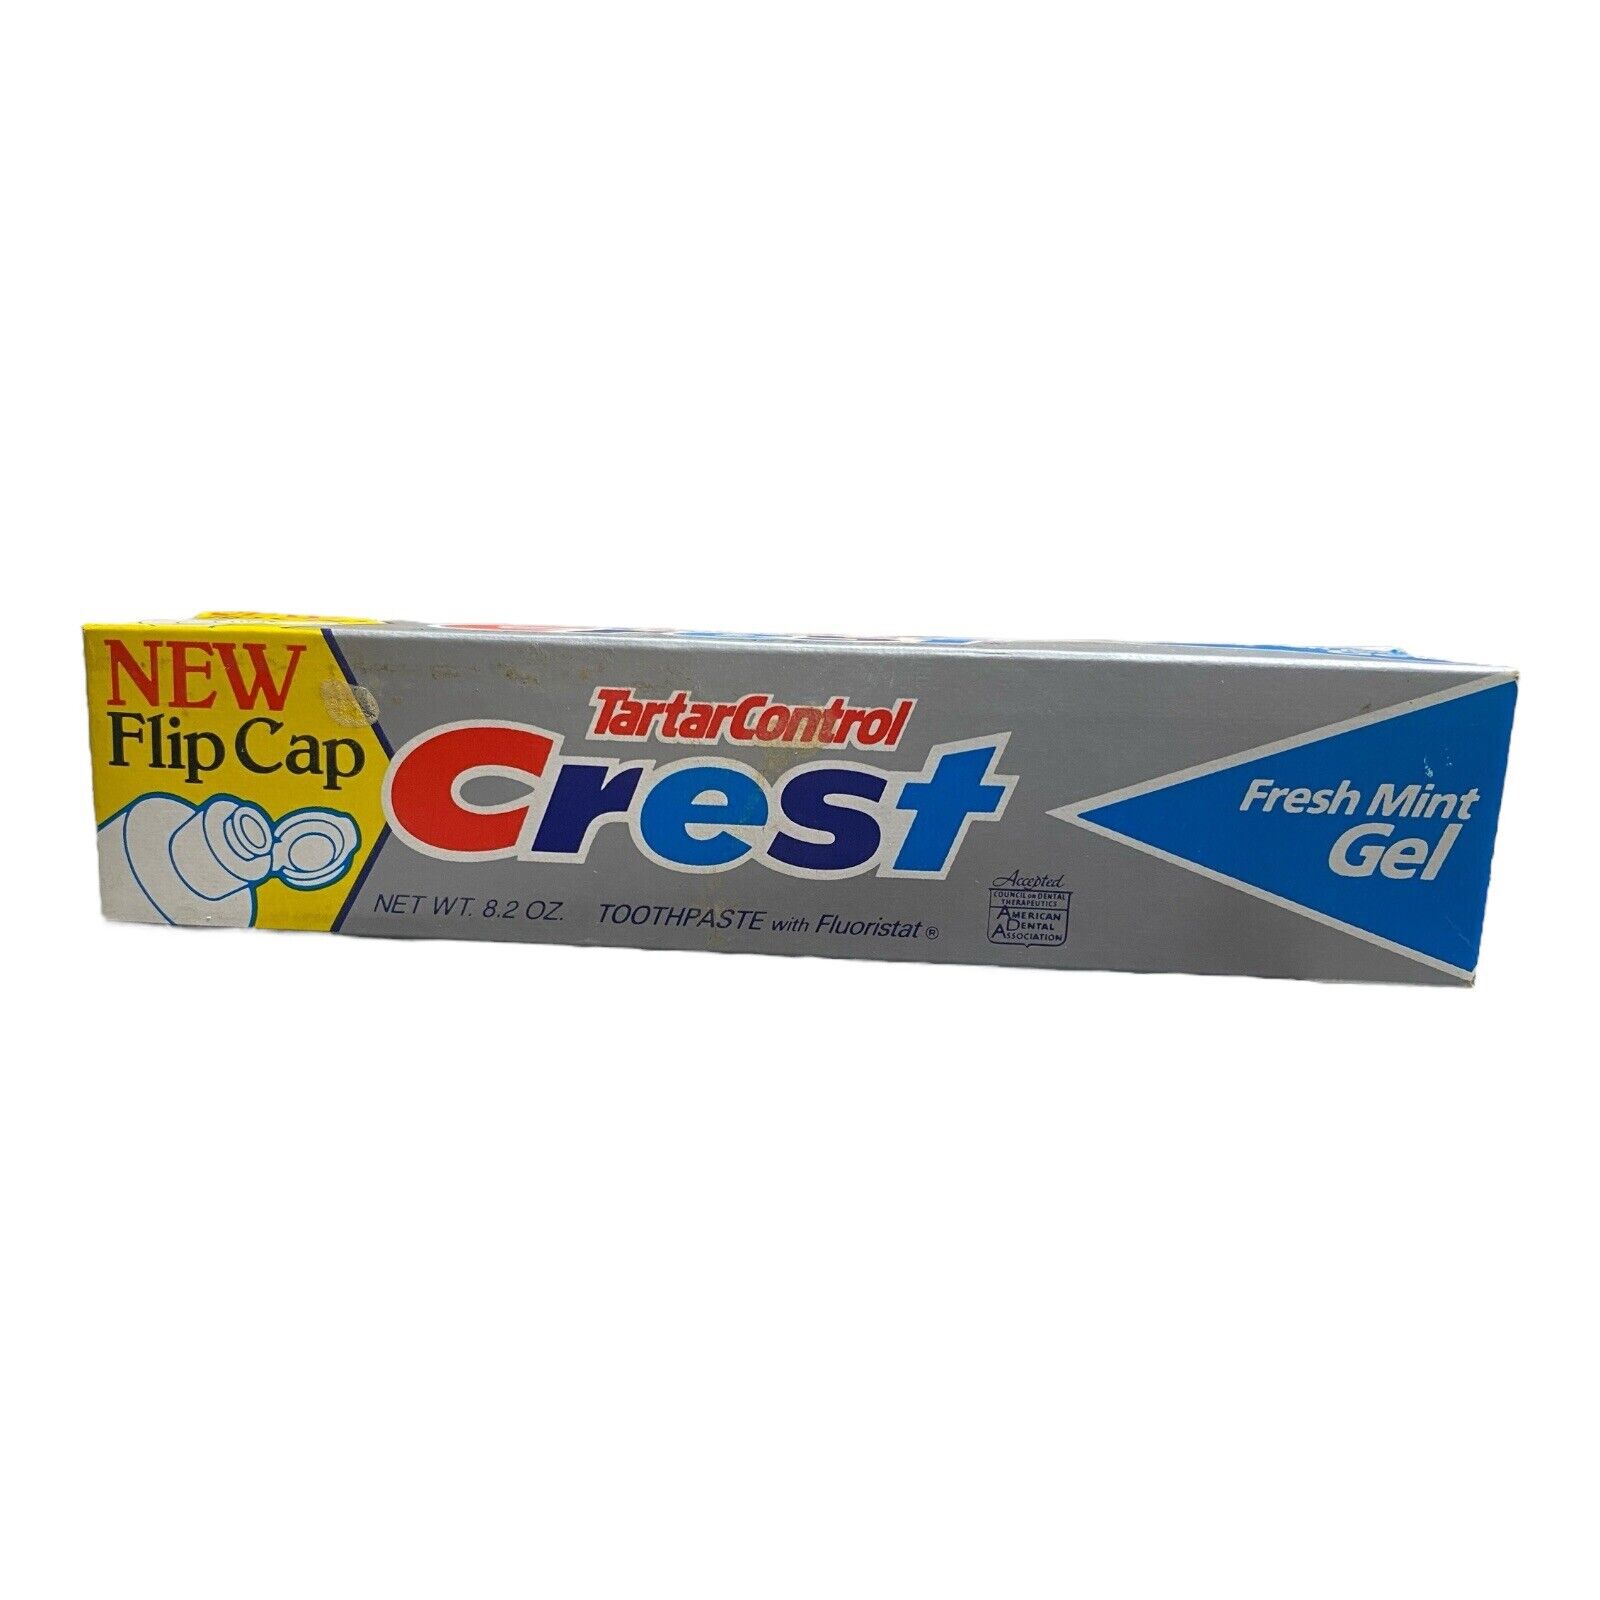 Vintage Crest New Flip Cap Tartar Control NOS Advertisement 8.2oz Fresh Mint Gel